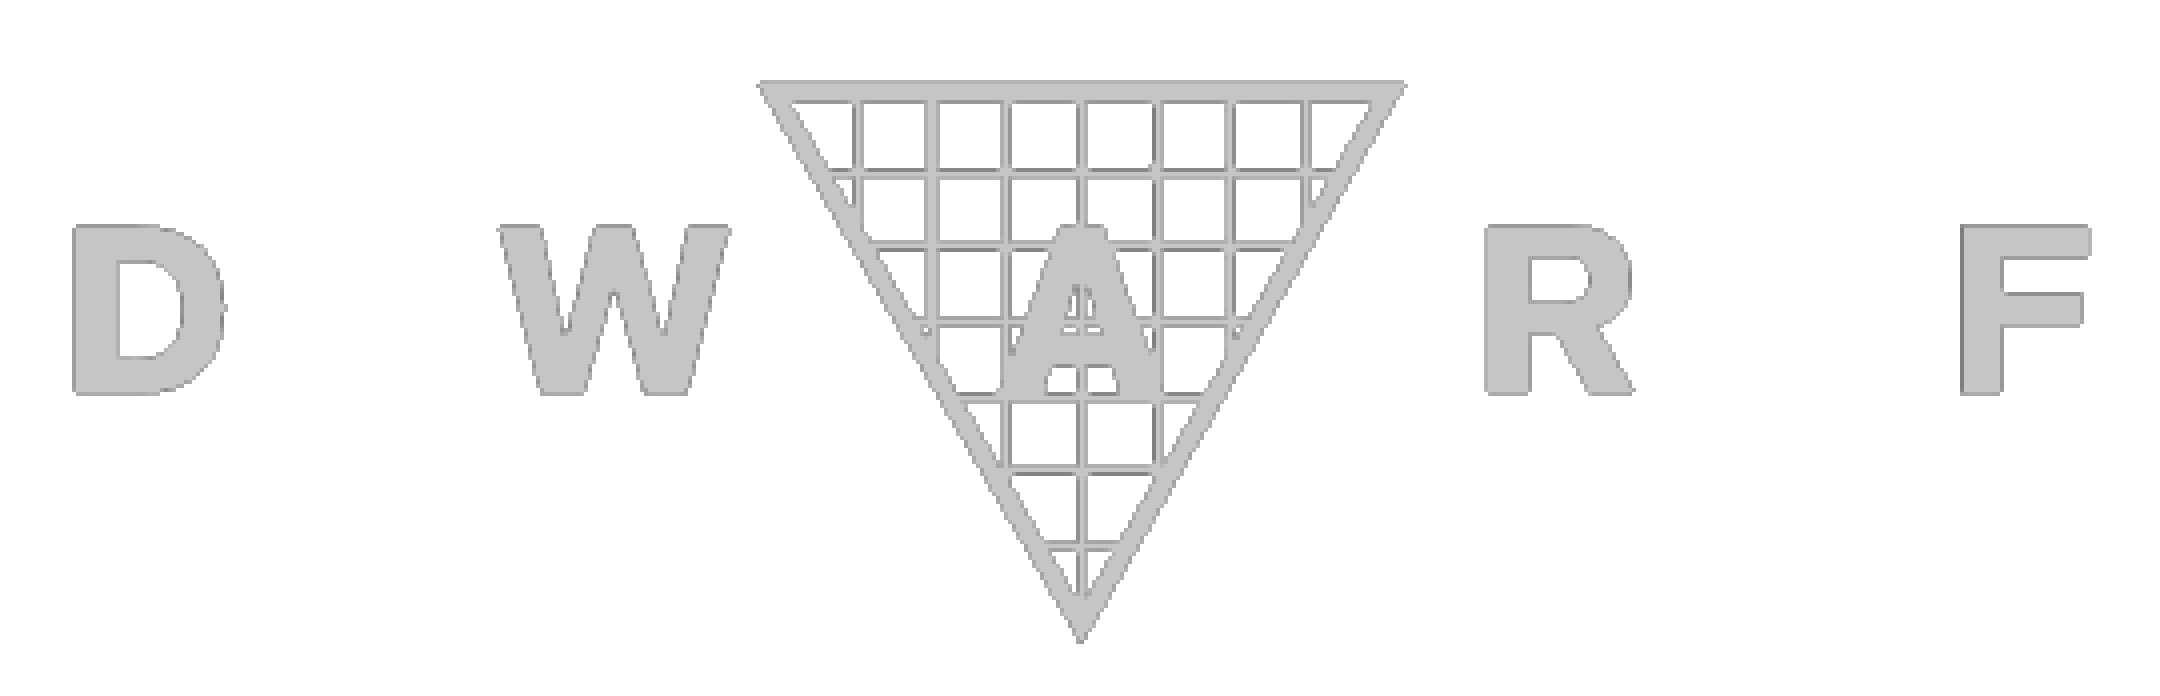 DWARF logo